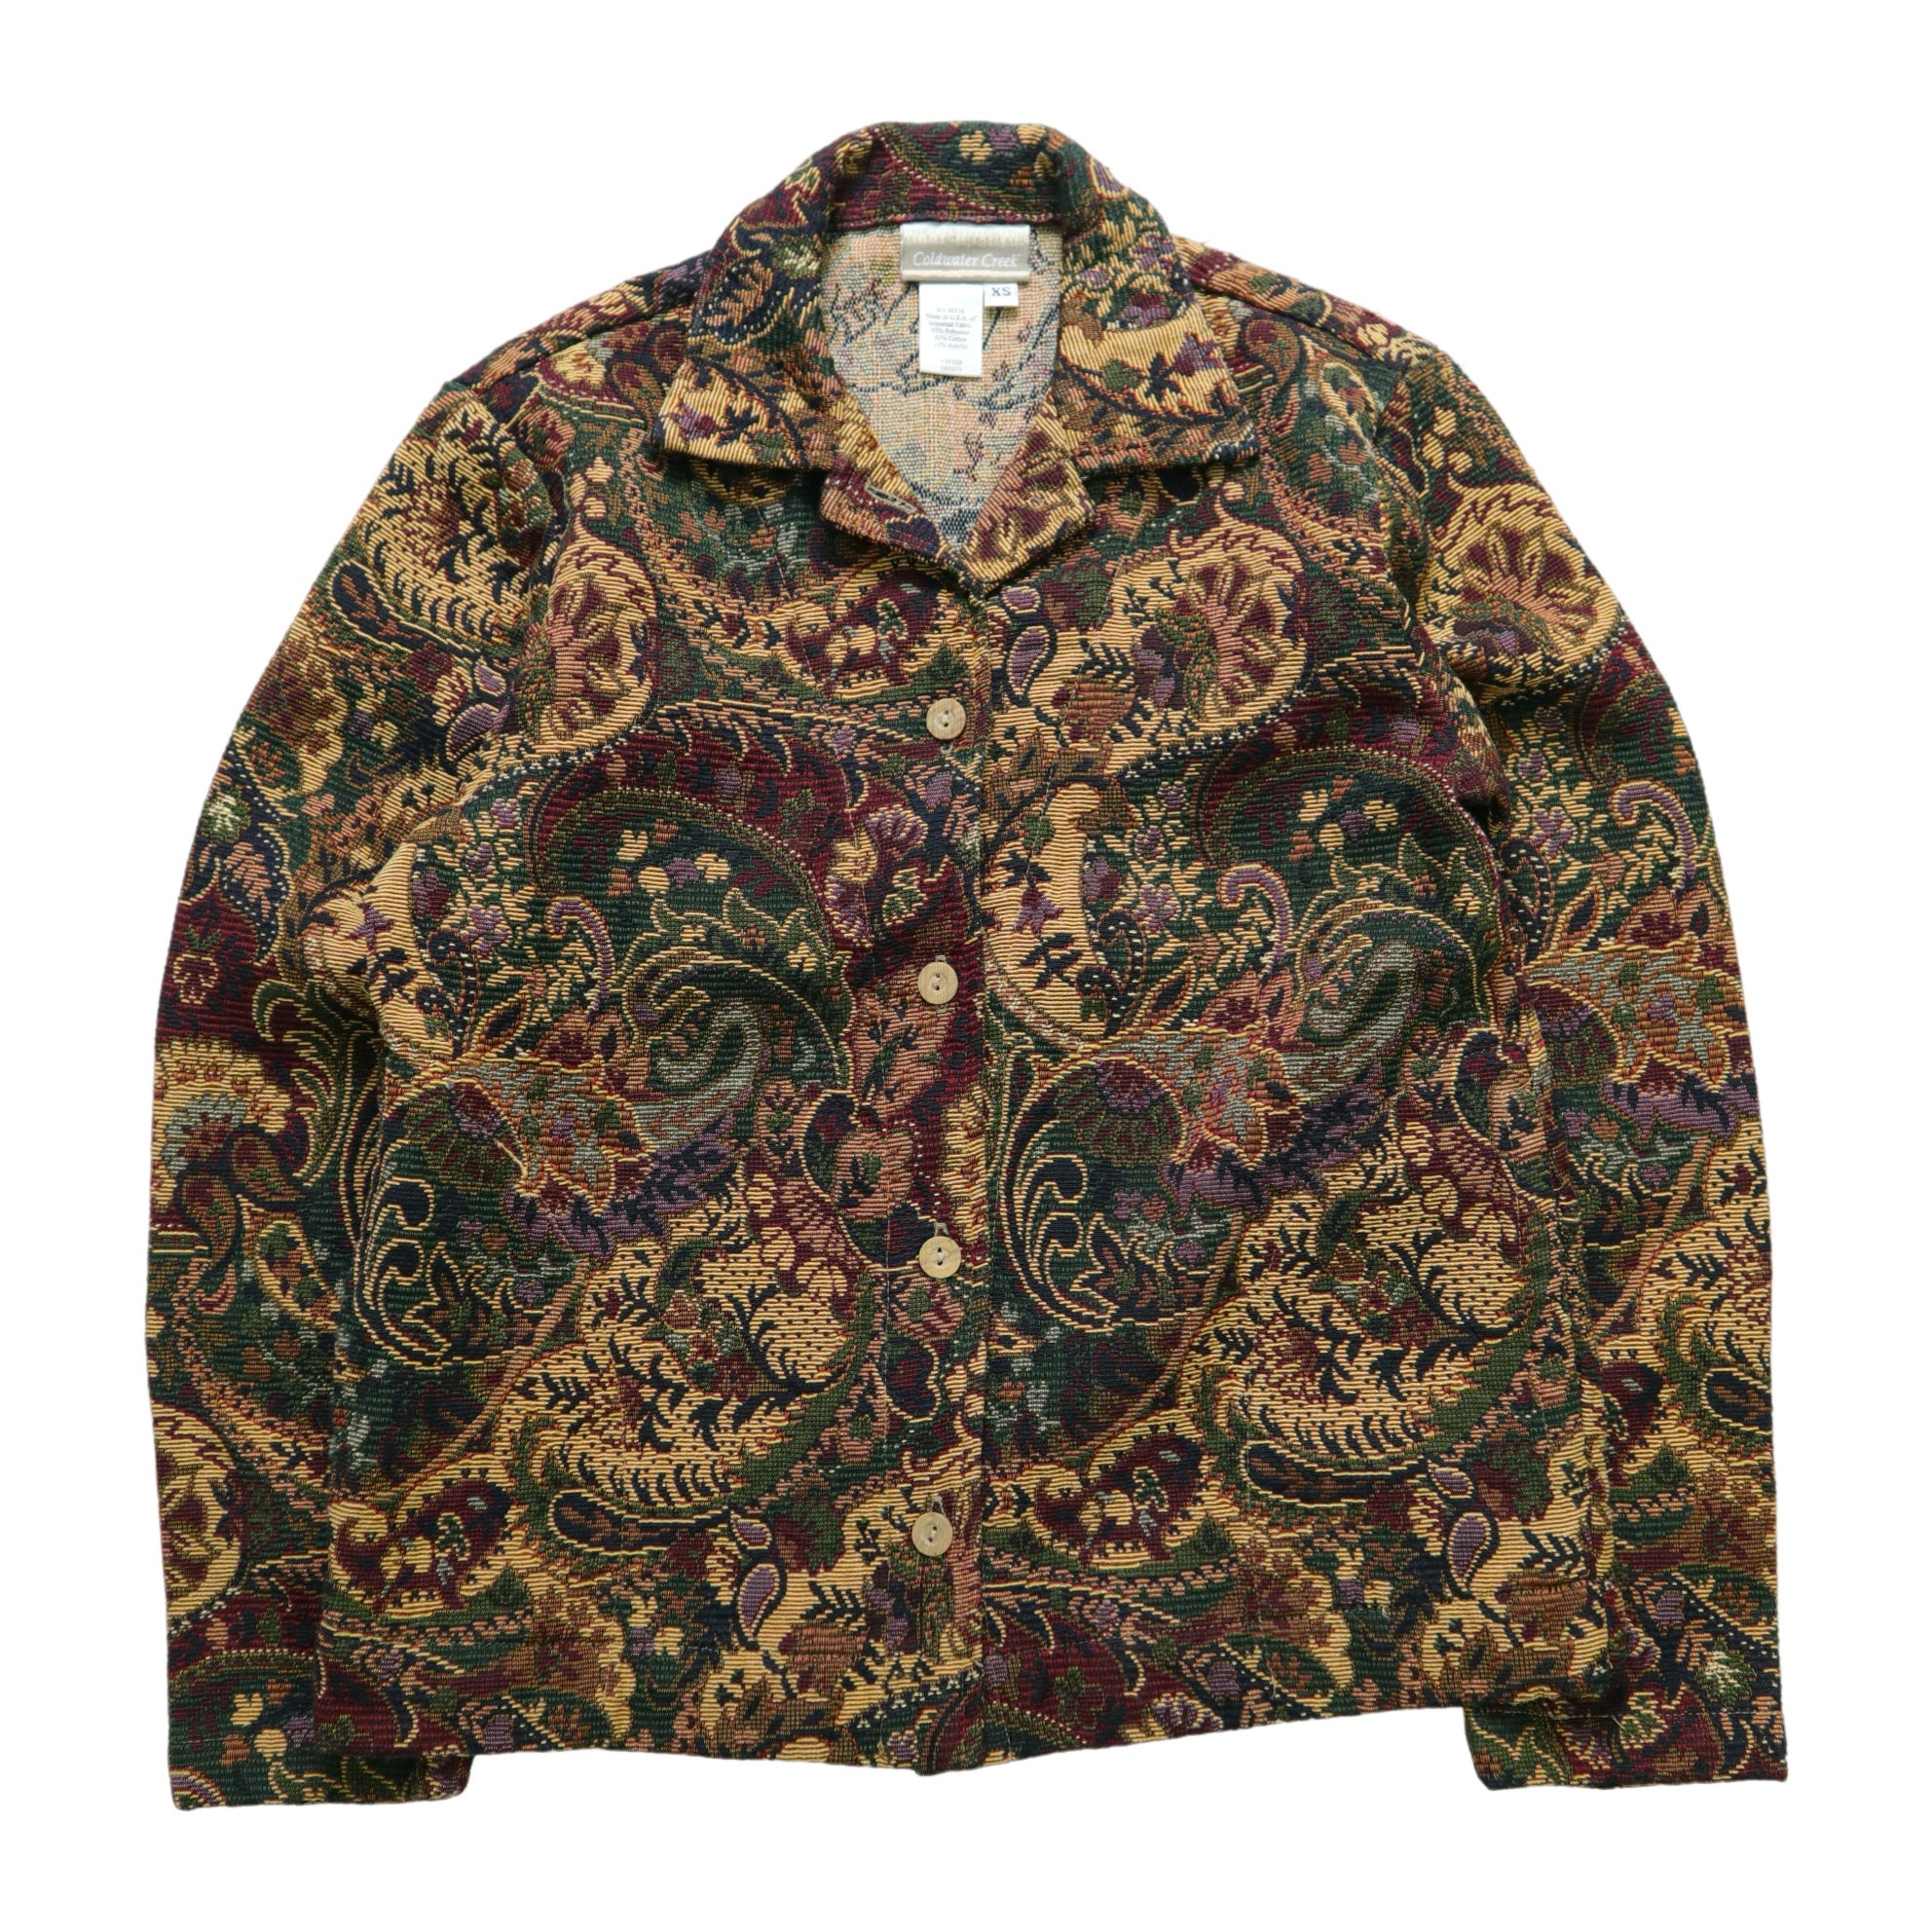 Vintage 1960s USA embroidered patch safari jacket vintage coat – 富士鳥古著